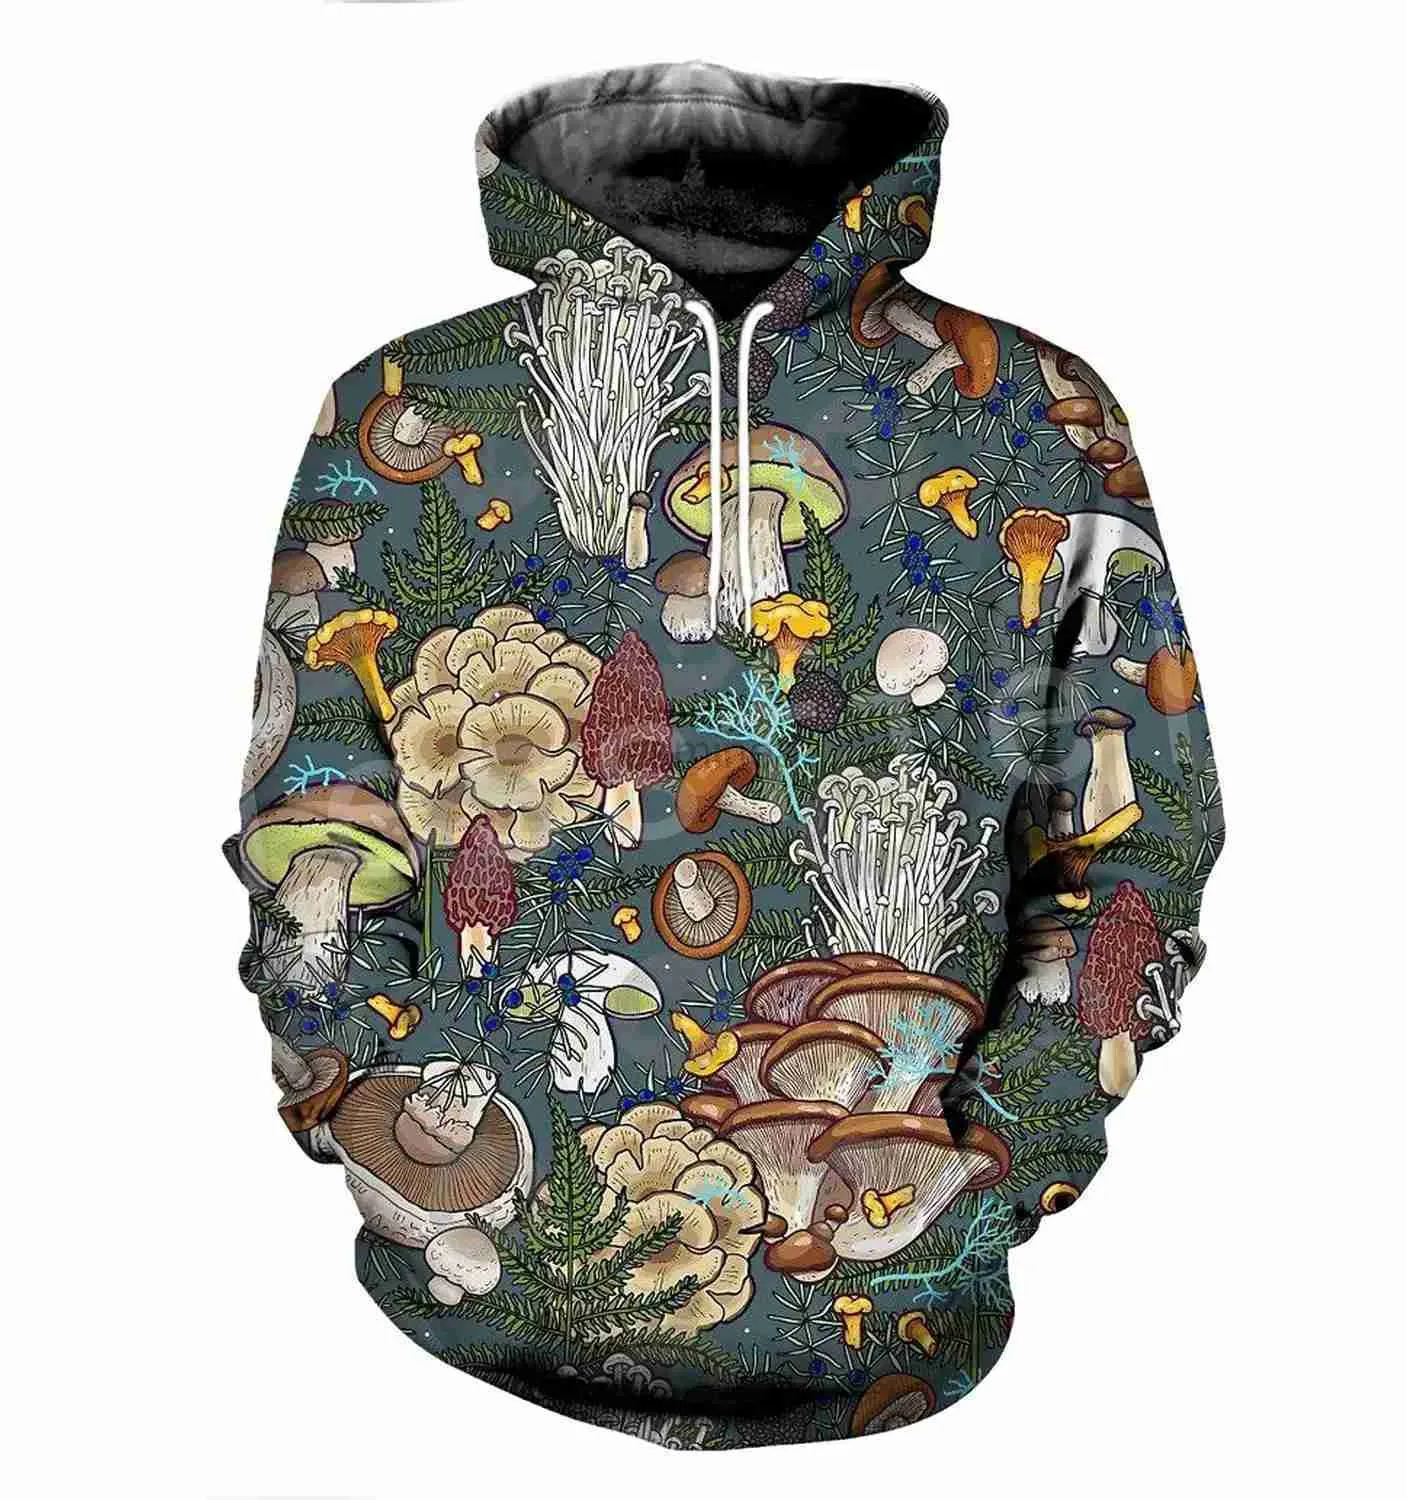 Men's Hoodies Sweatshirts Tessffel Newest Plants Mushroom Fungus Camo Funny New Fashion Tracksuit Pullover 3DPrint Zipper/Hoodies/Sweatshirts/Jacket A-19 24328